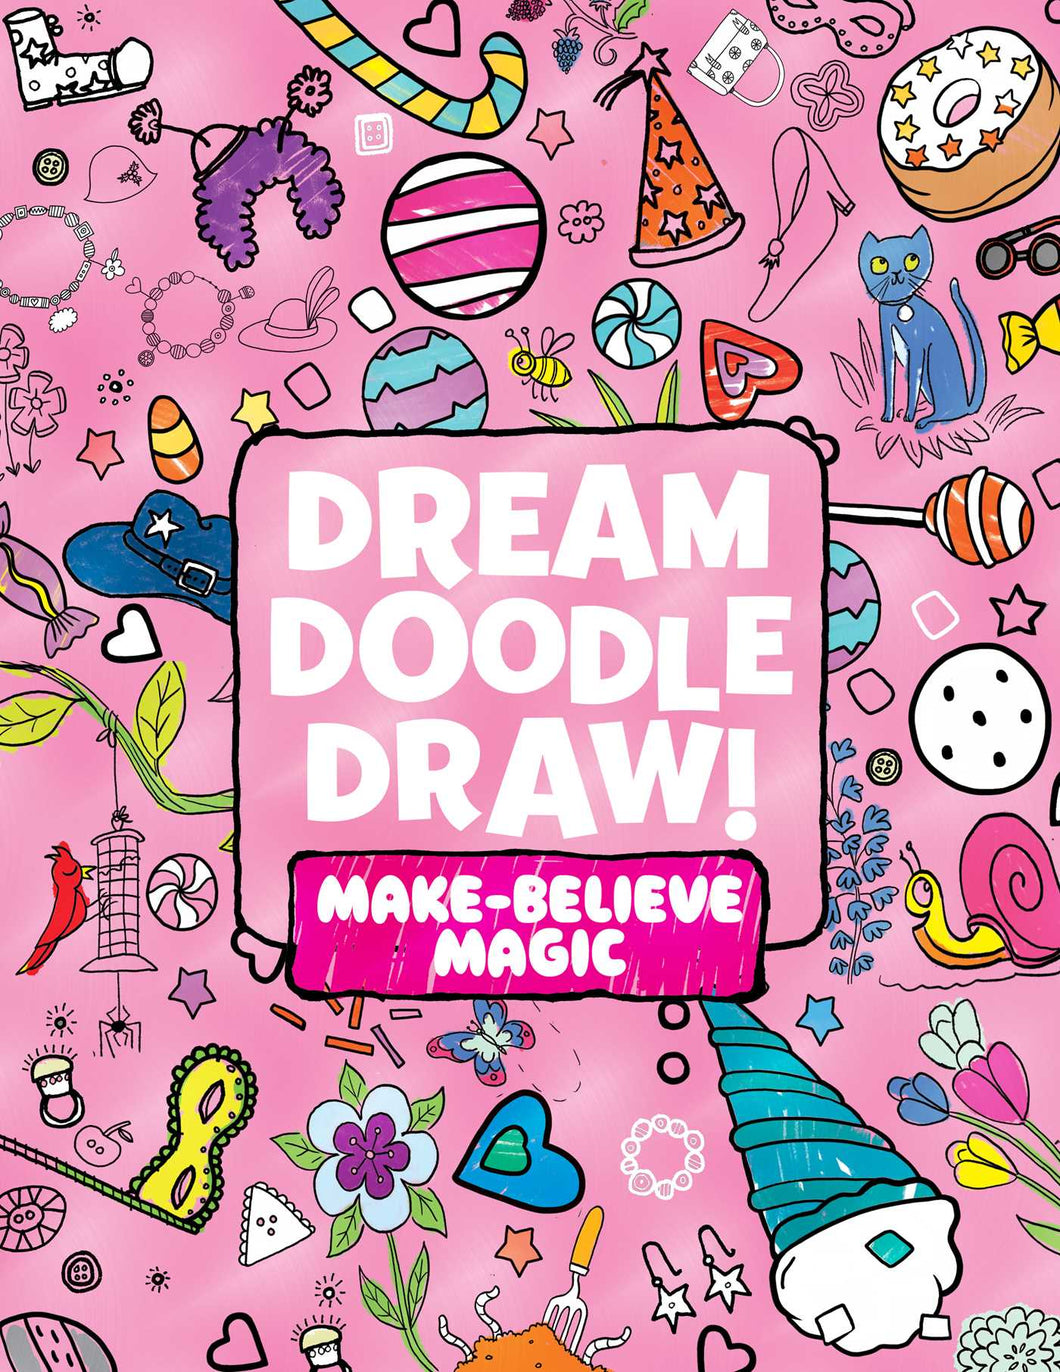 Dream Doodle Draw! Make Believe Magic